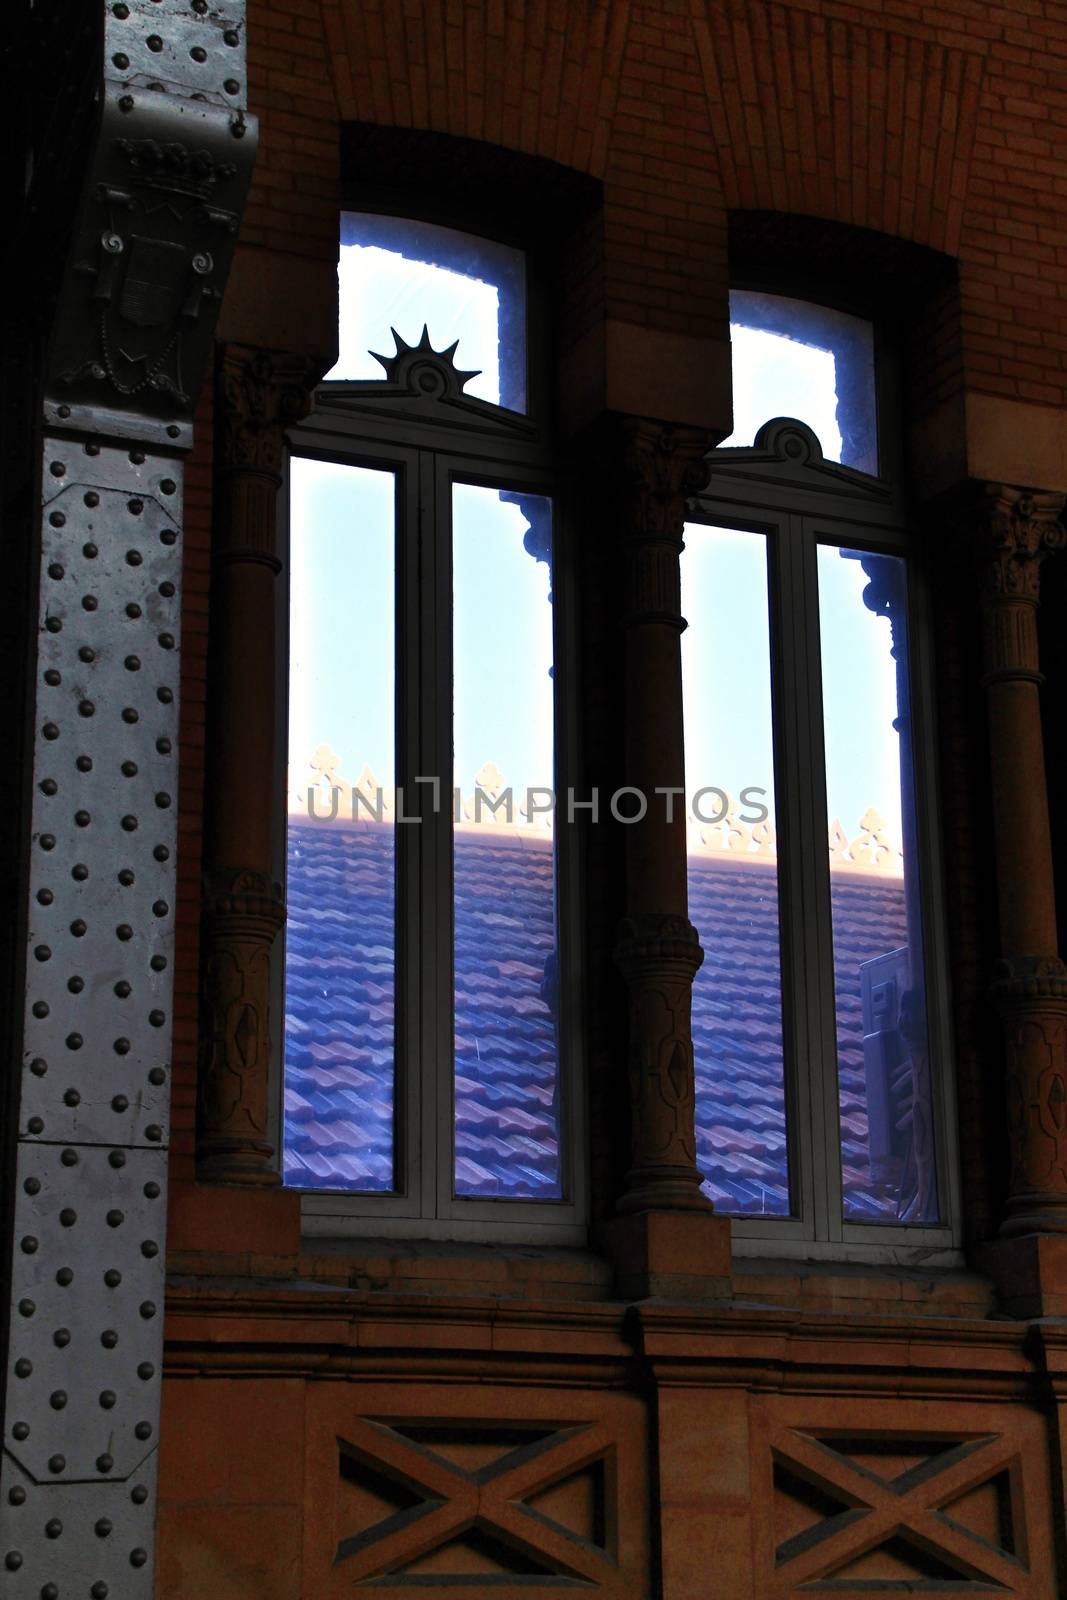 Beautiful art deco style windows at Atocha train station in Madrid